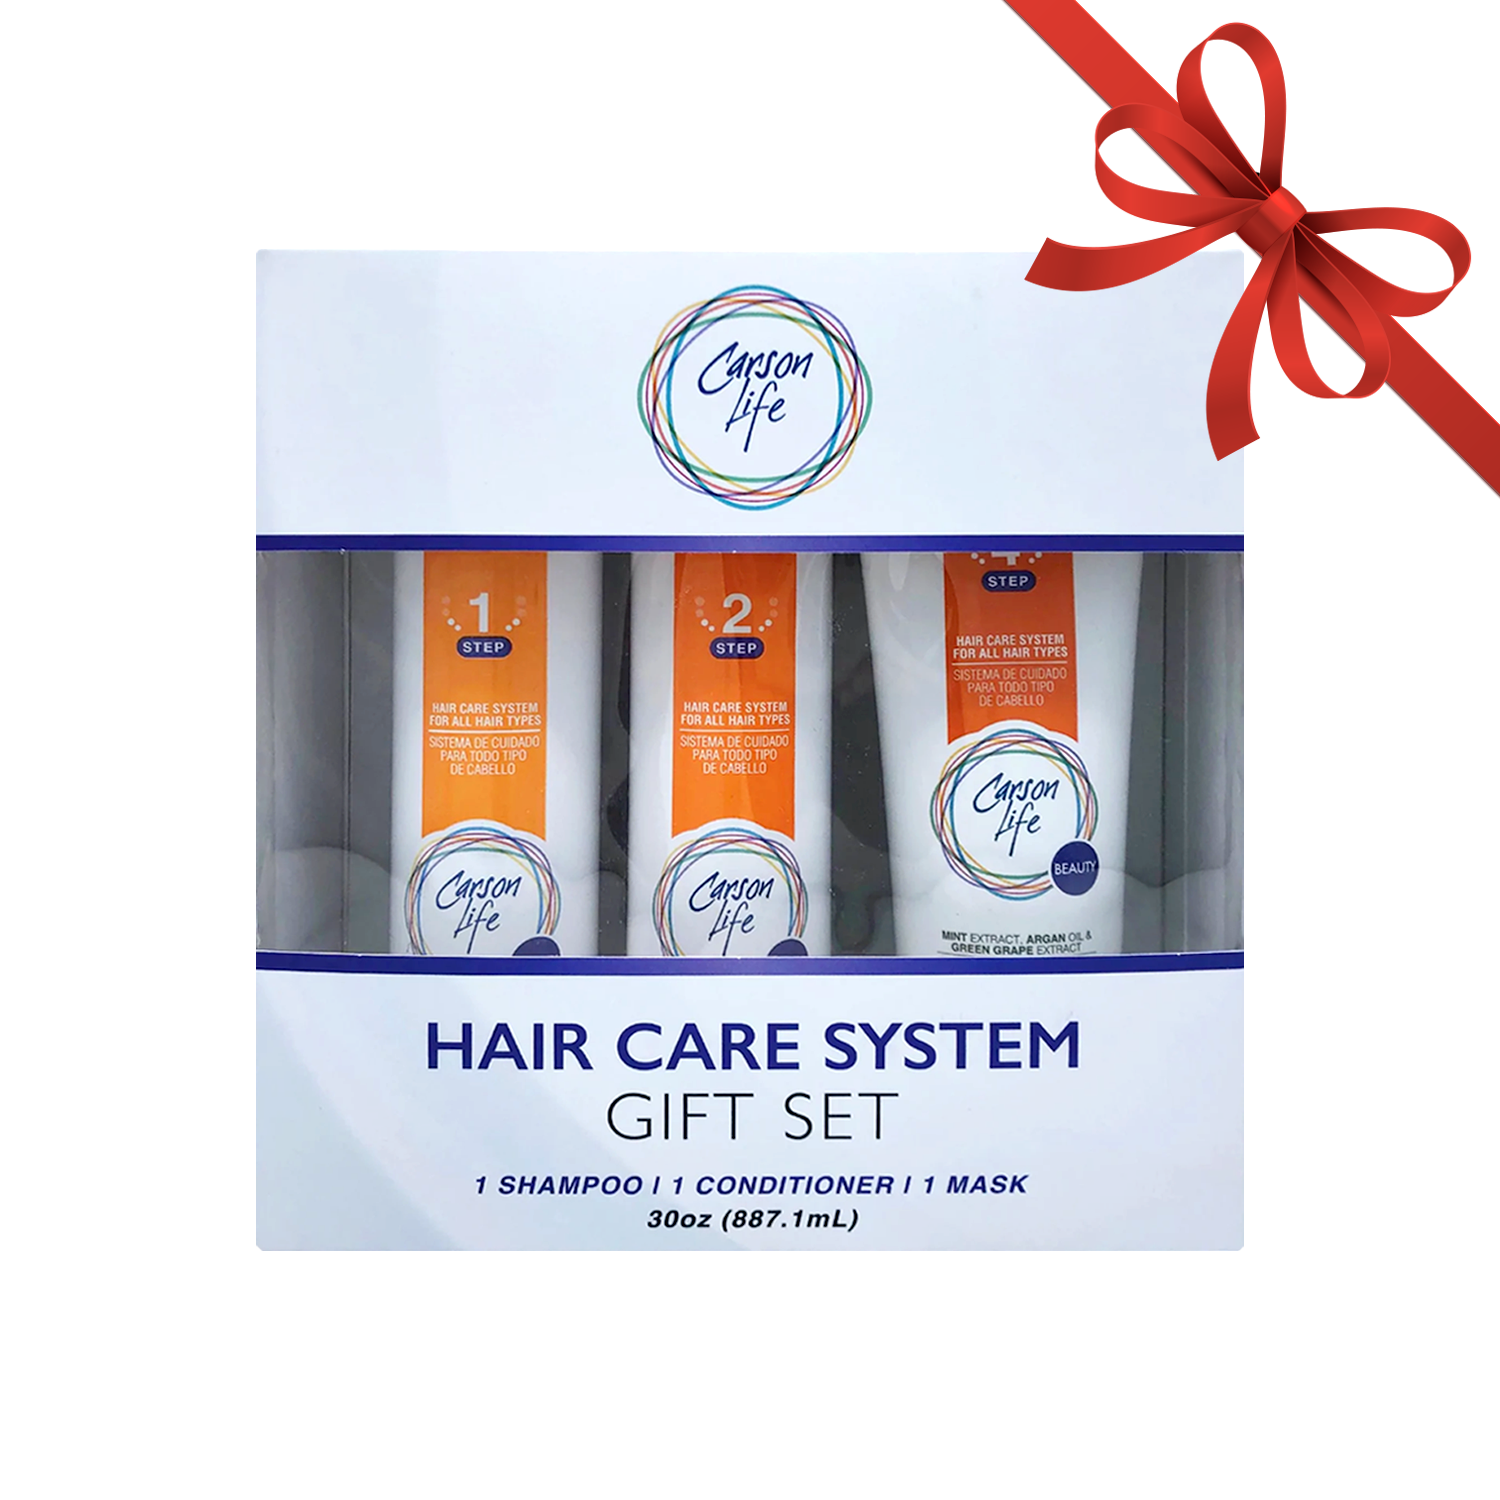 Hair Care gift set